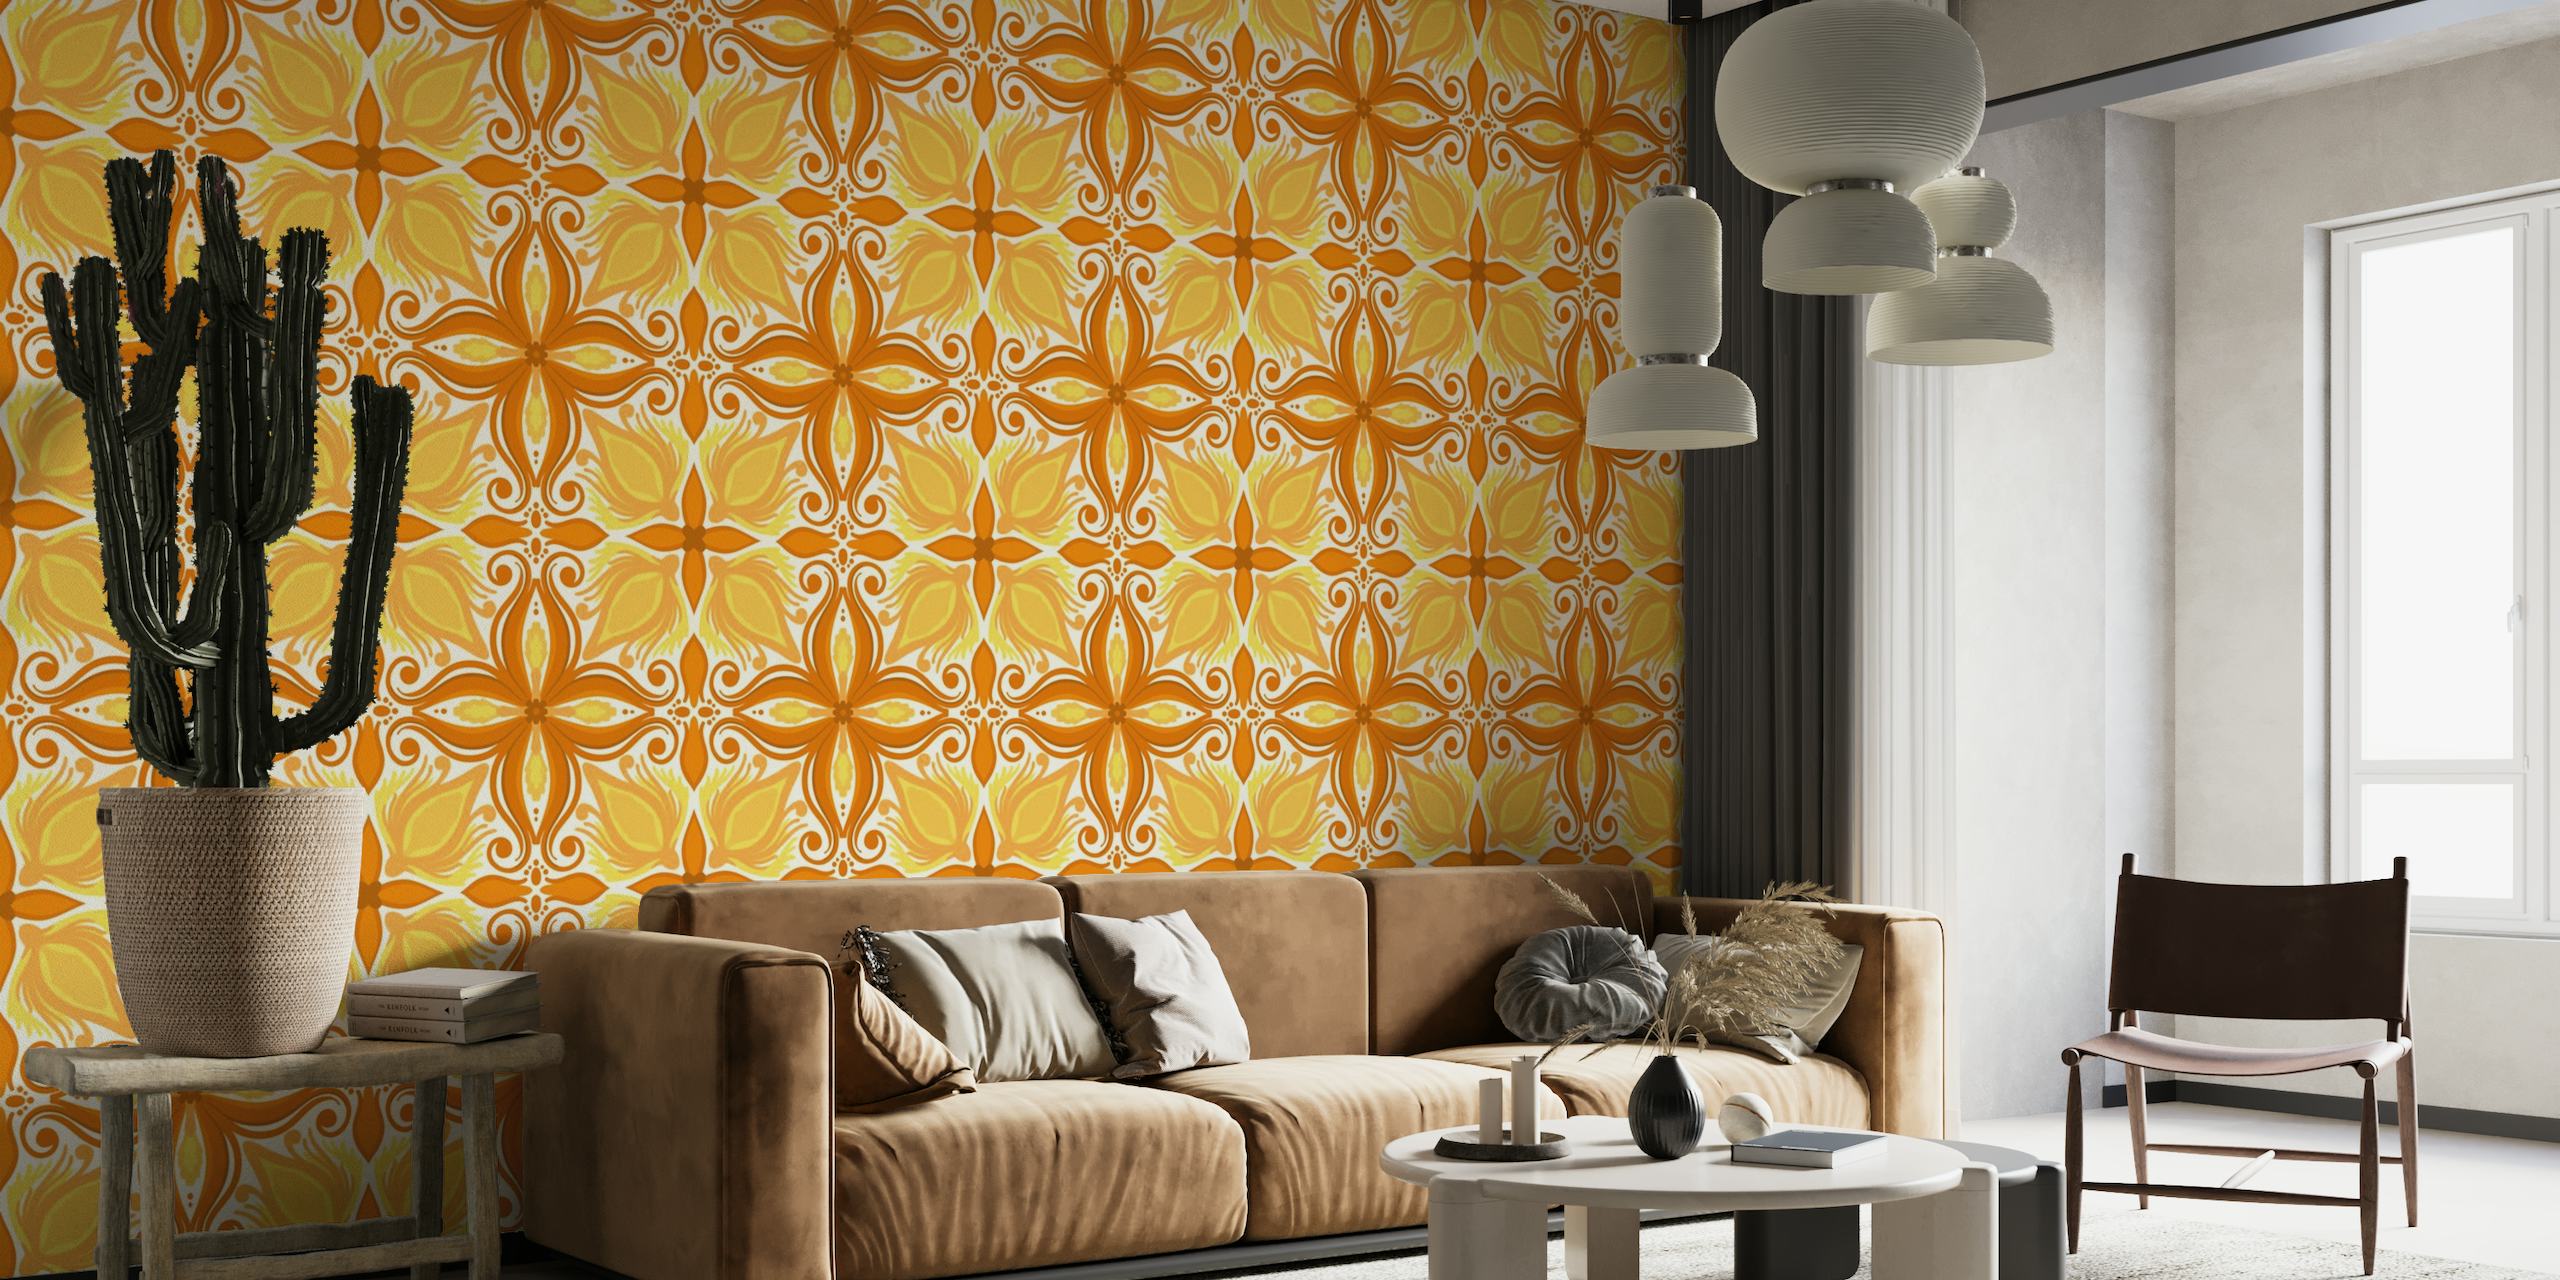 Ornate tiles, yellow and orange 8 wallpaper